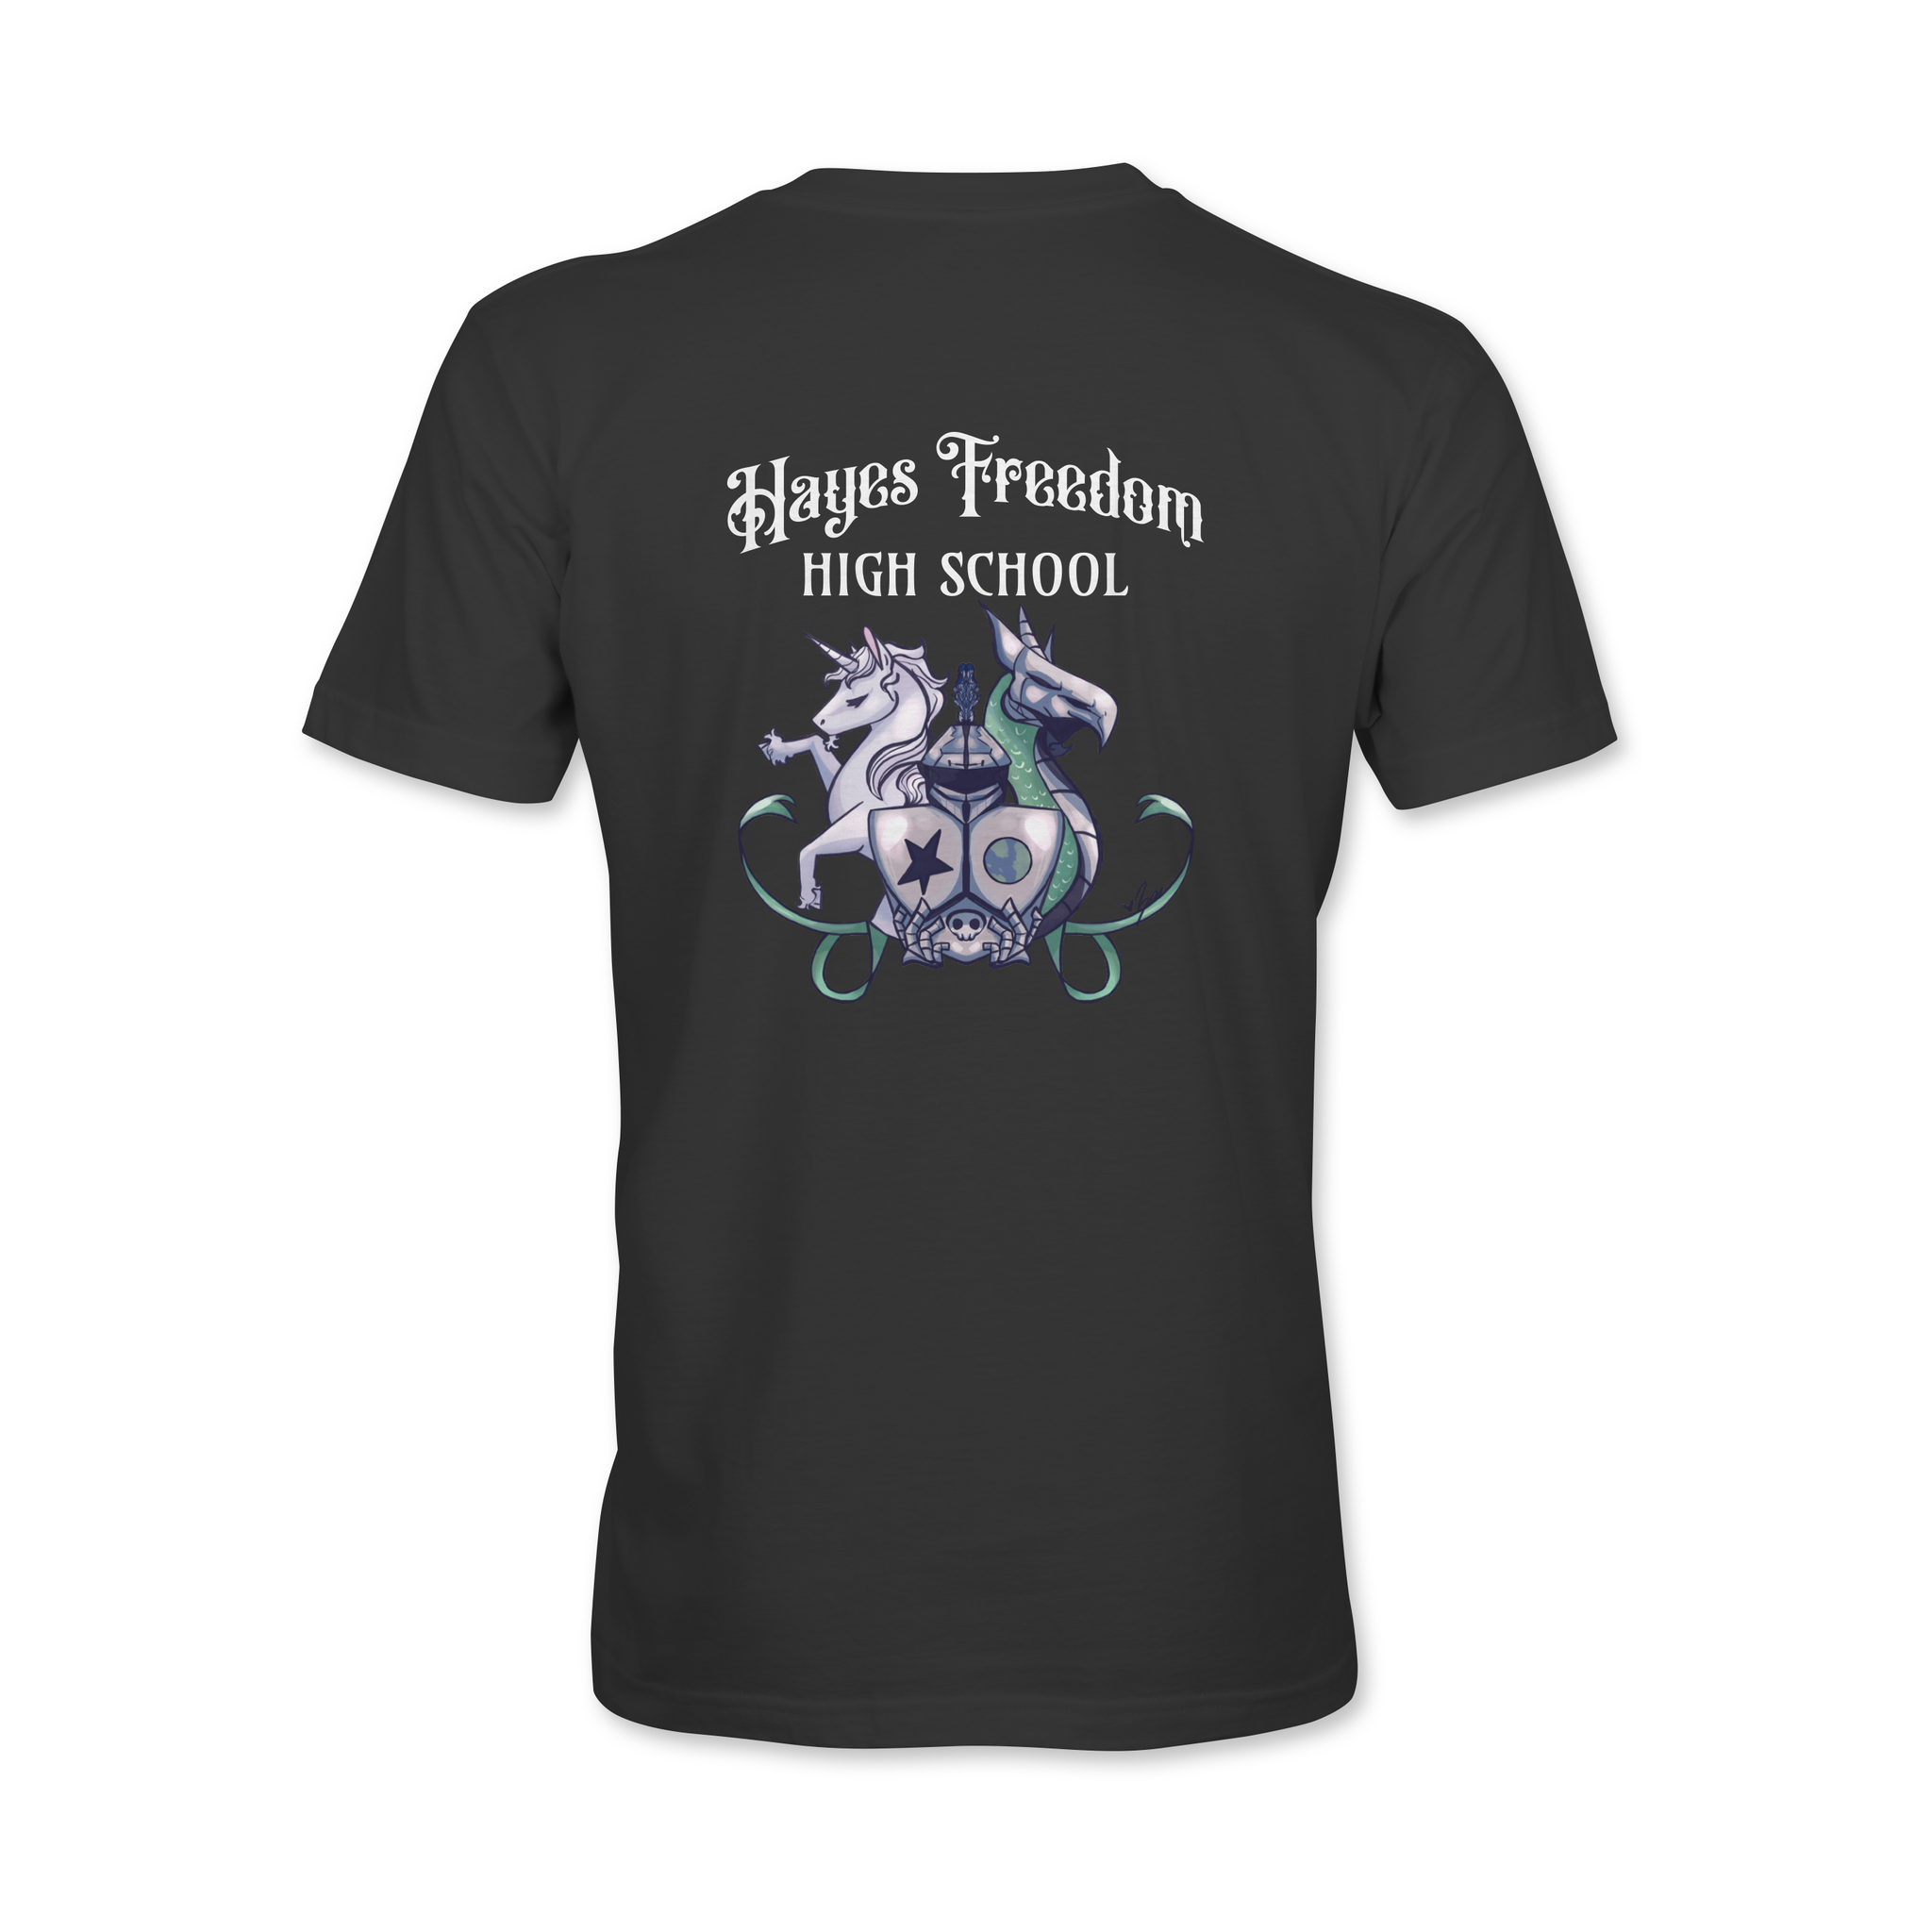 Hayes Freedom High School Standard T-shirt